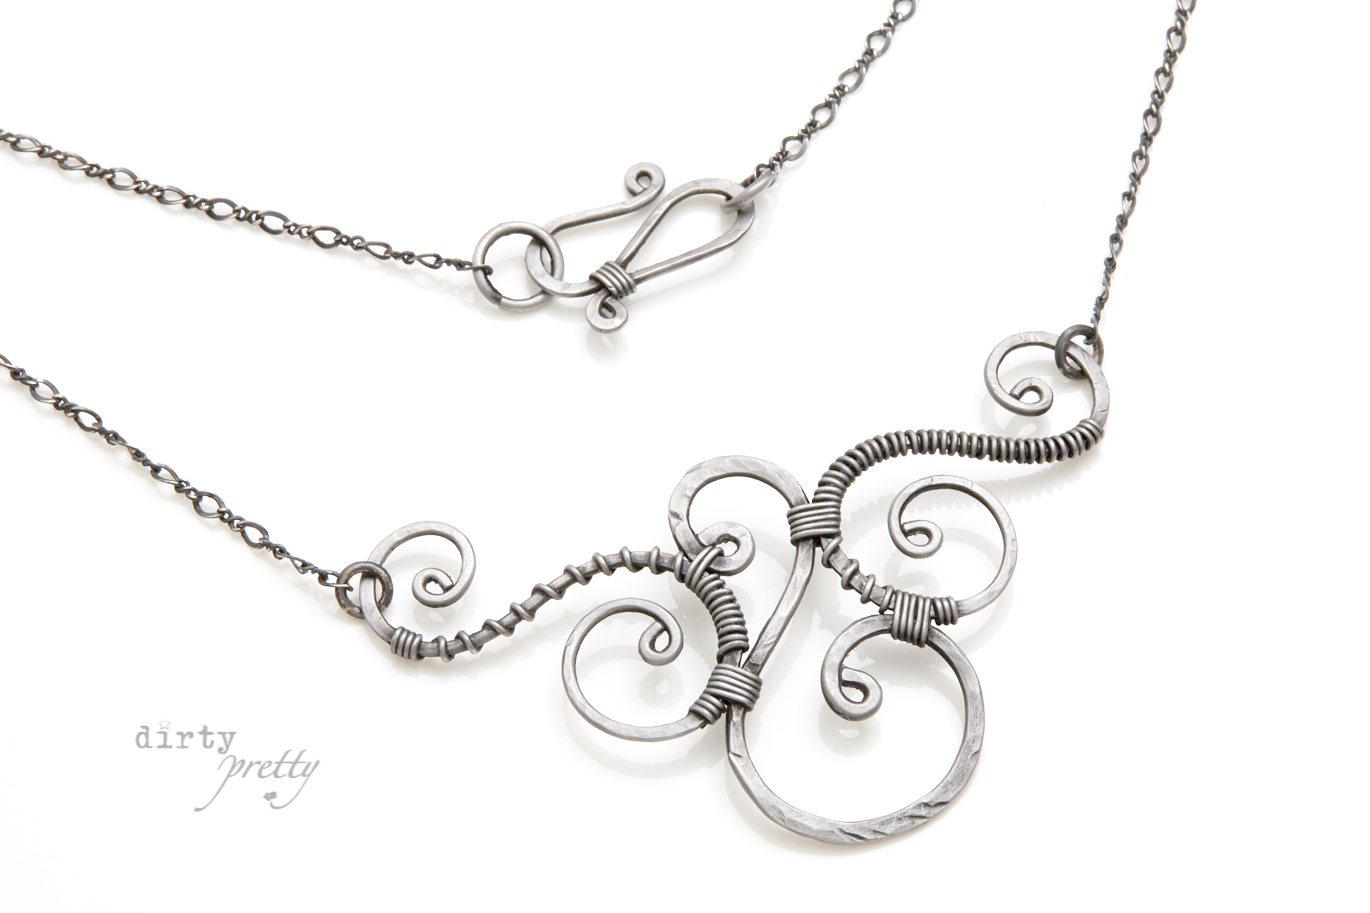 11th wedding anniversary gifts - Steel Wedding Anniversary Gifts - Trio Necklace by dirtypretty artwear